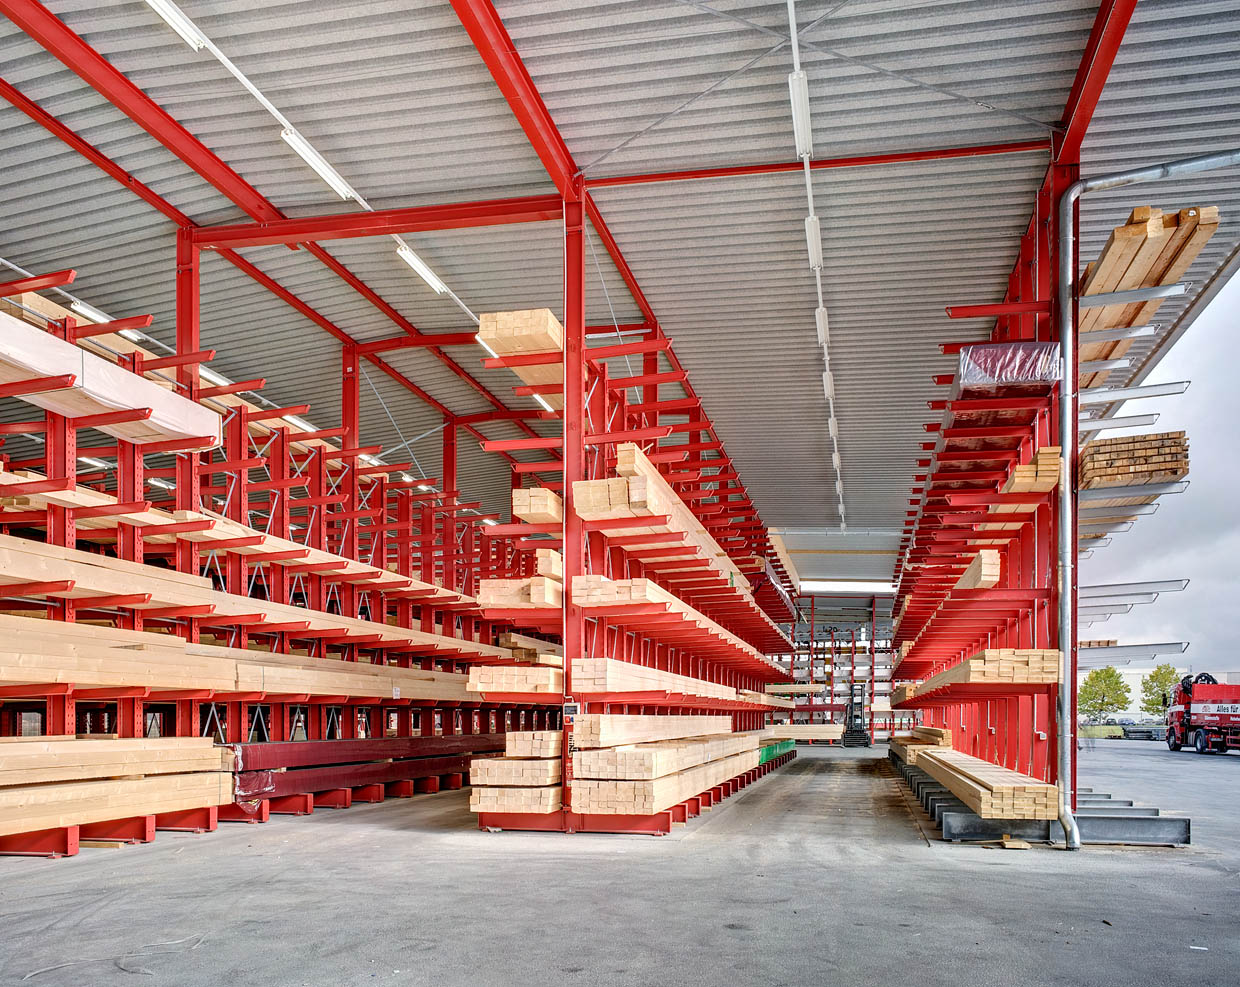 [Translate "Slovenia"] Rack-clad warehouse Cantilever racking